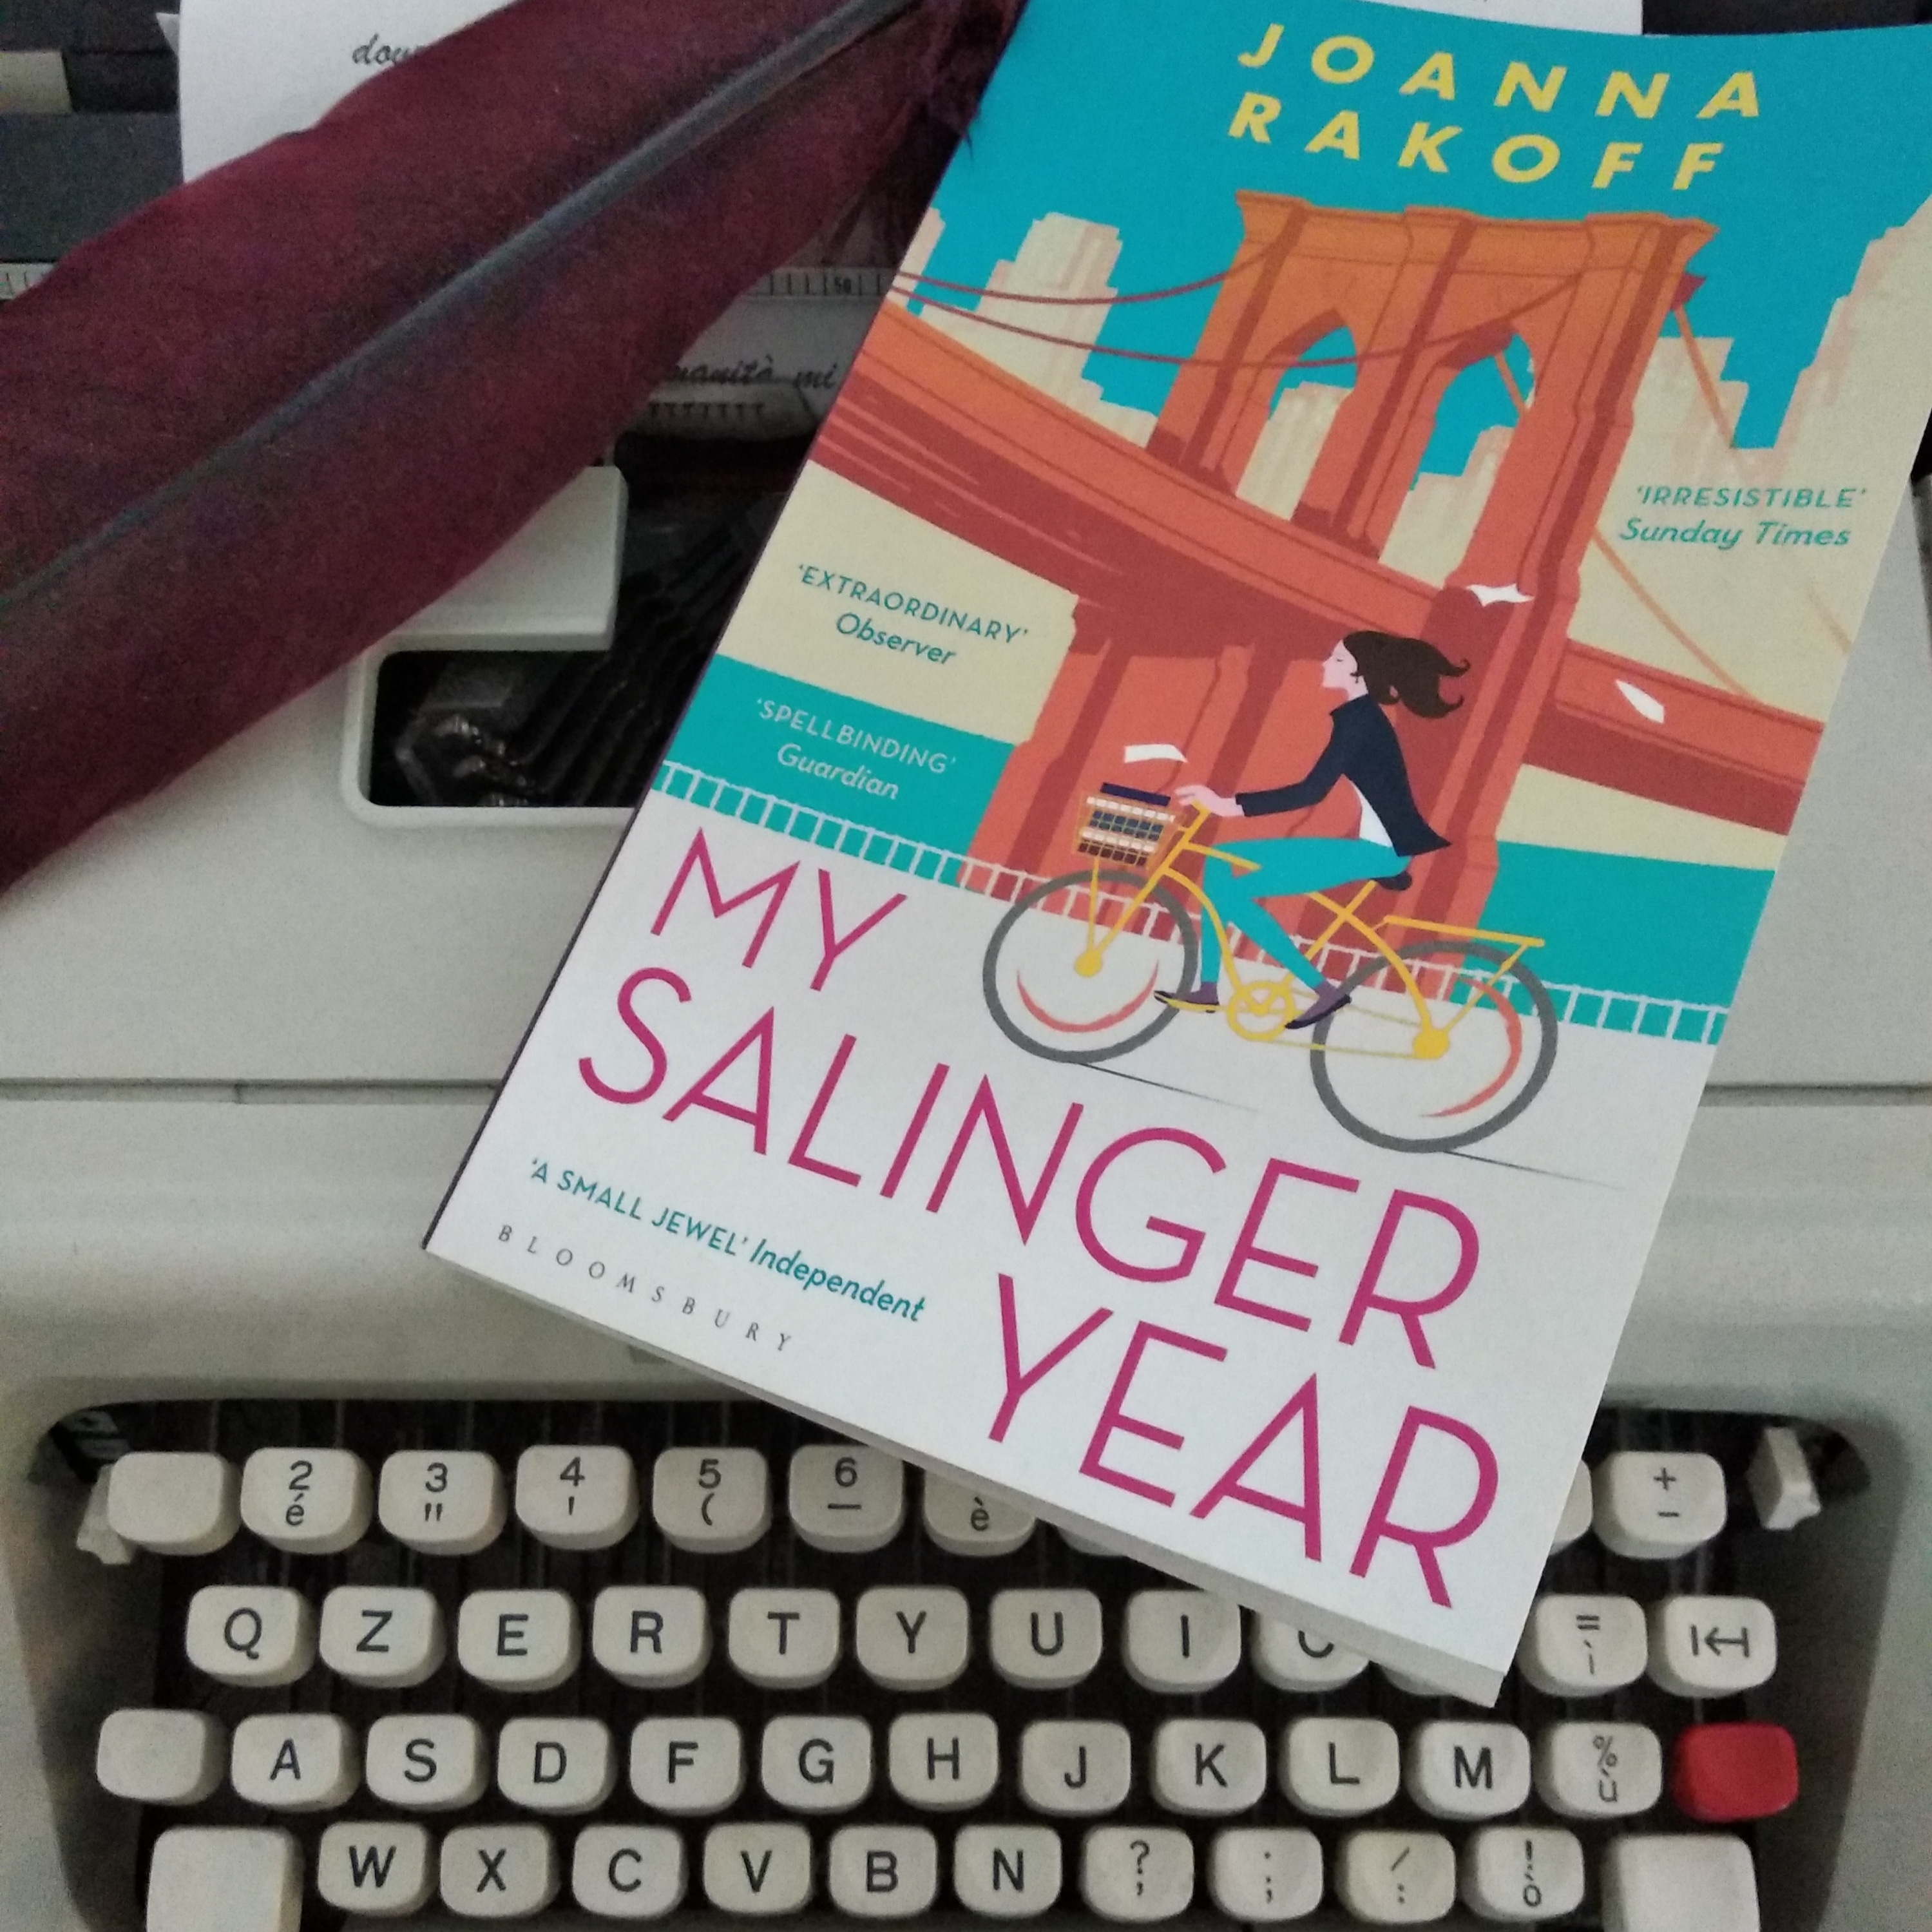 My Salinger Year (Un anno con Salinger)